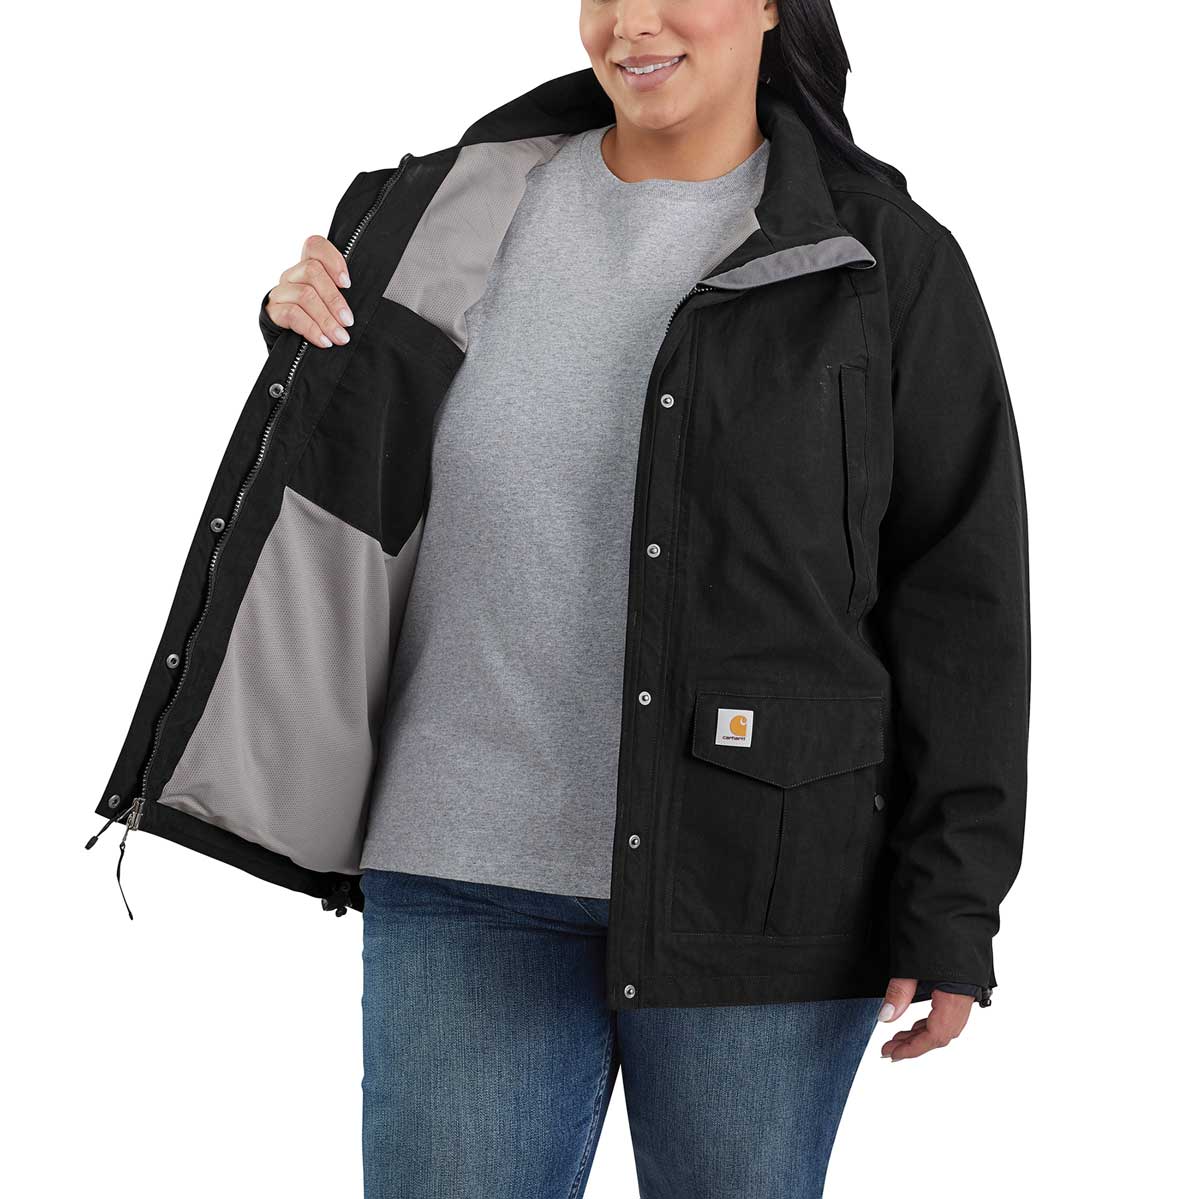 Carhartt Women's Shoreline Jacket